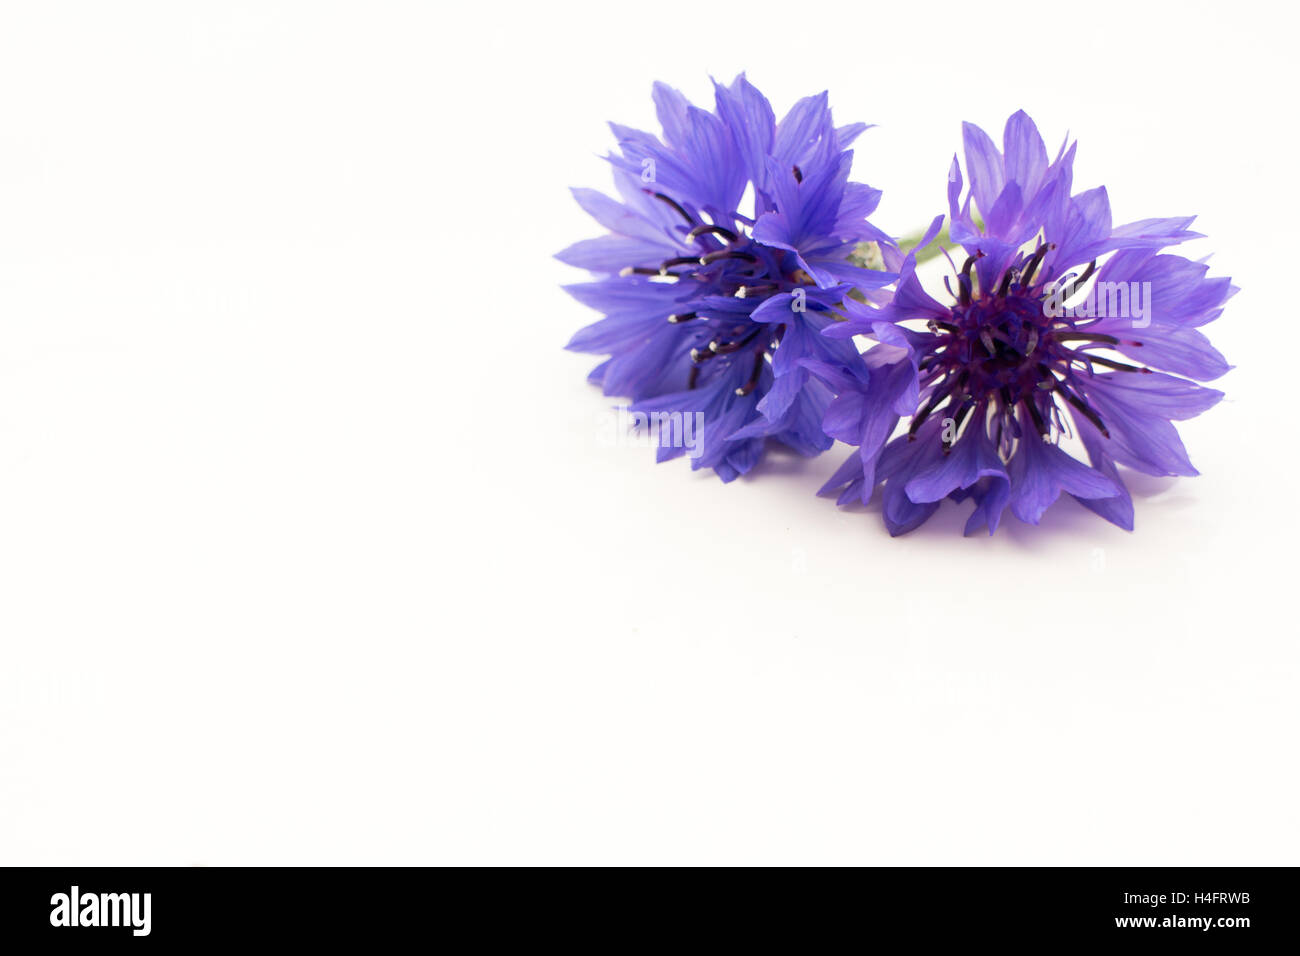 Bachelor button blue edible flower, landscape farm inspired Stock Photo